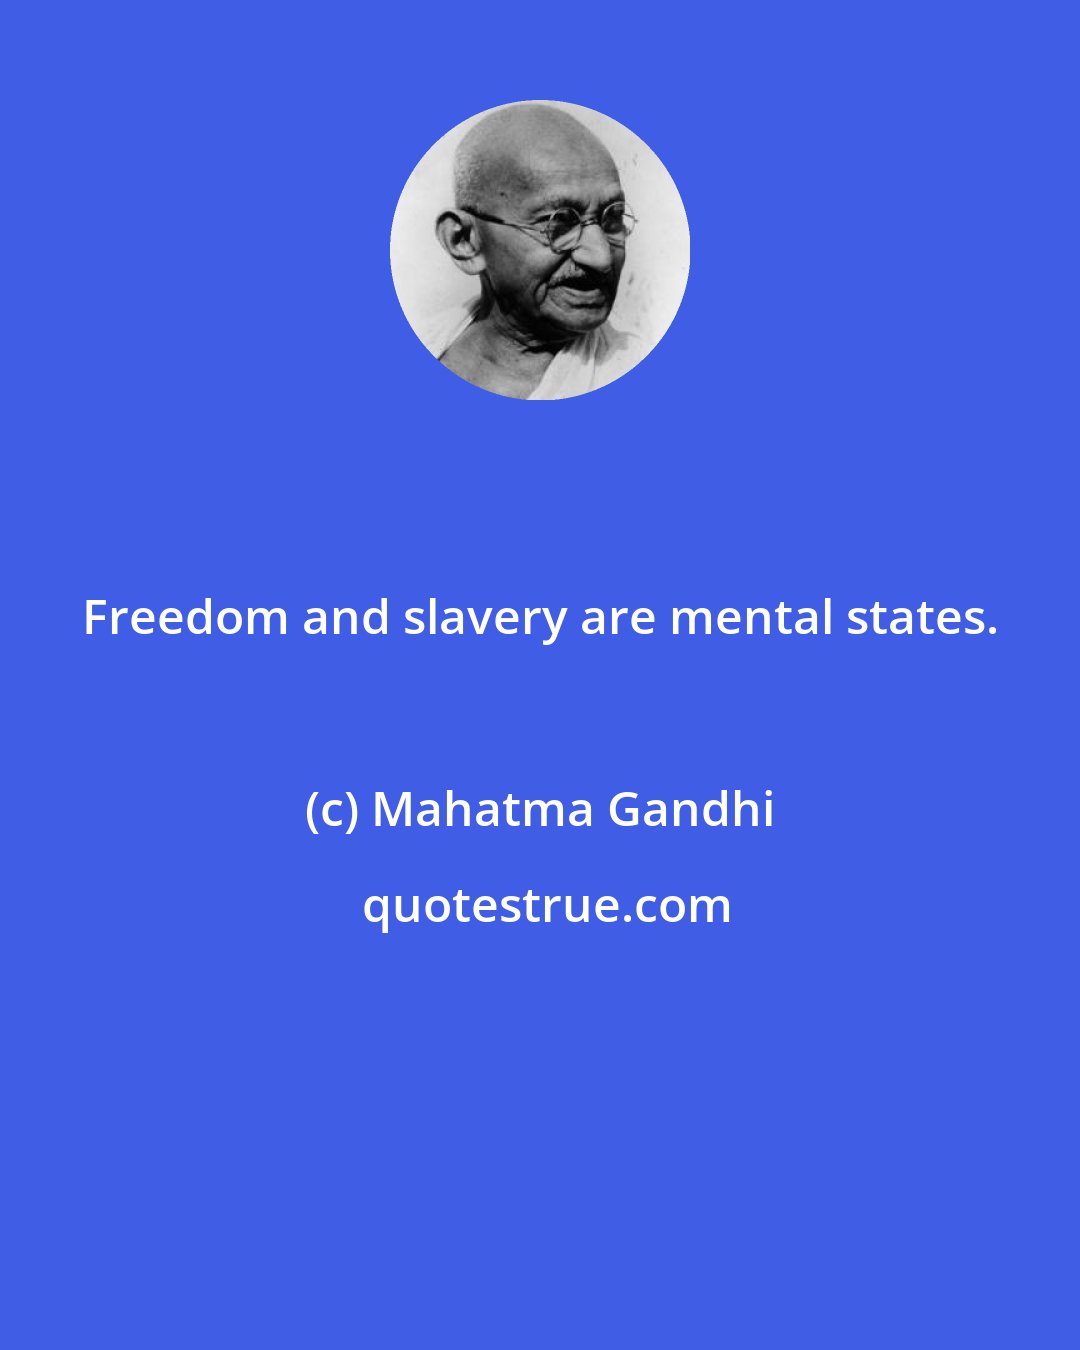 Mahatma Gandhi: Freedom and slavery are mental states.